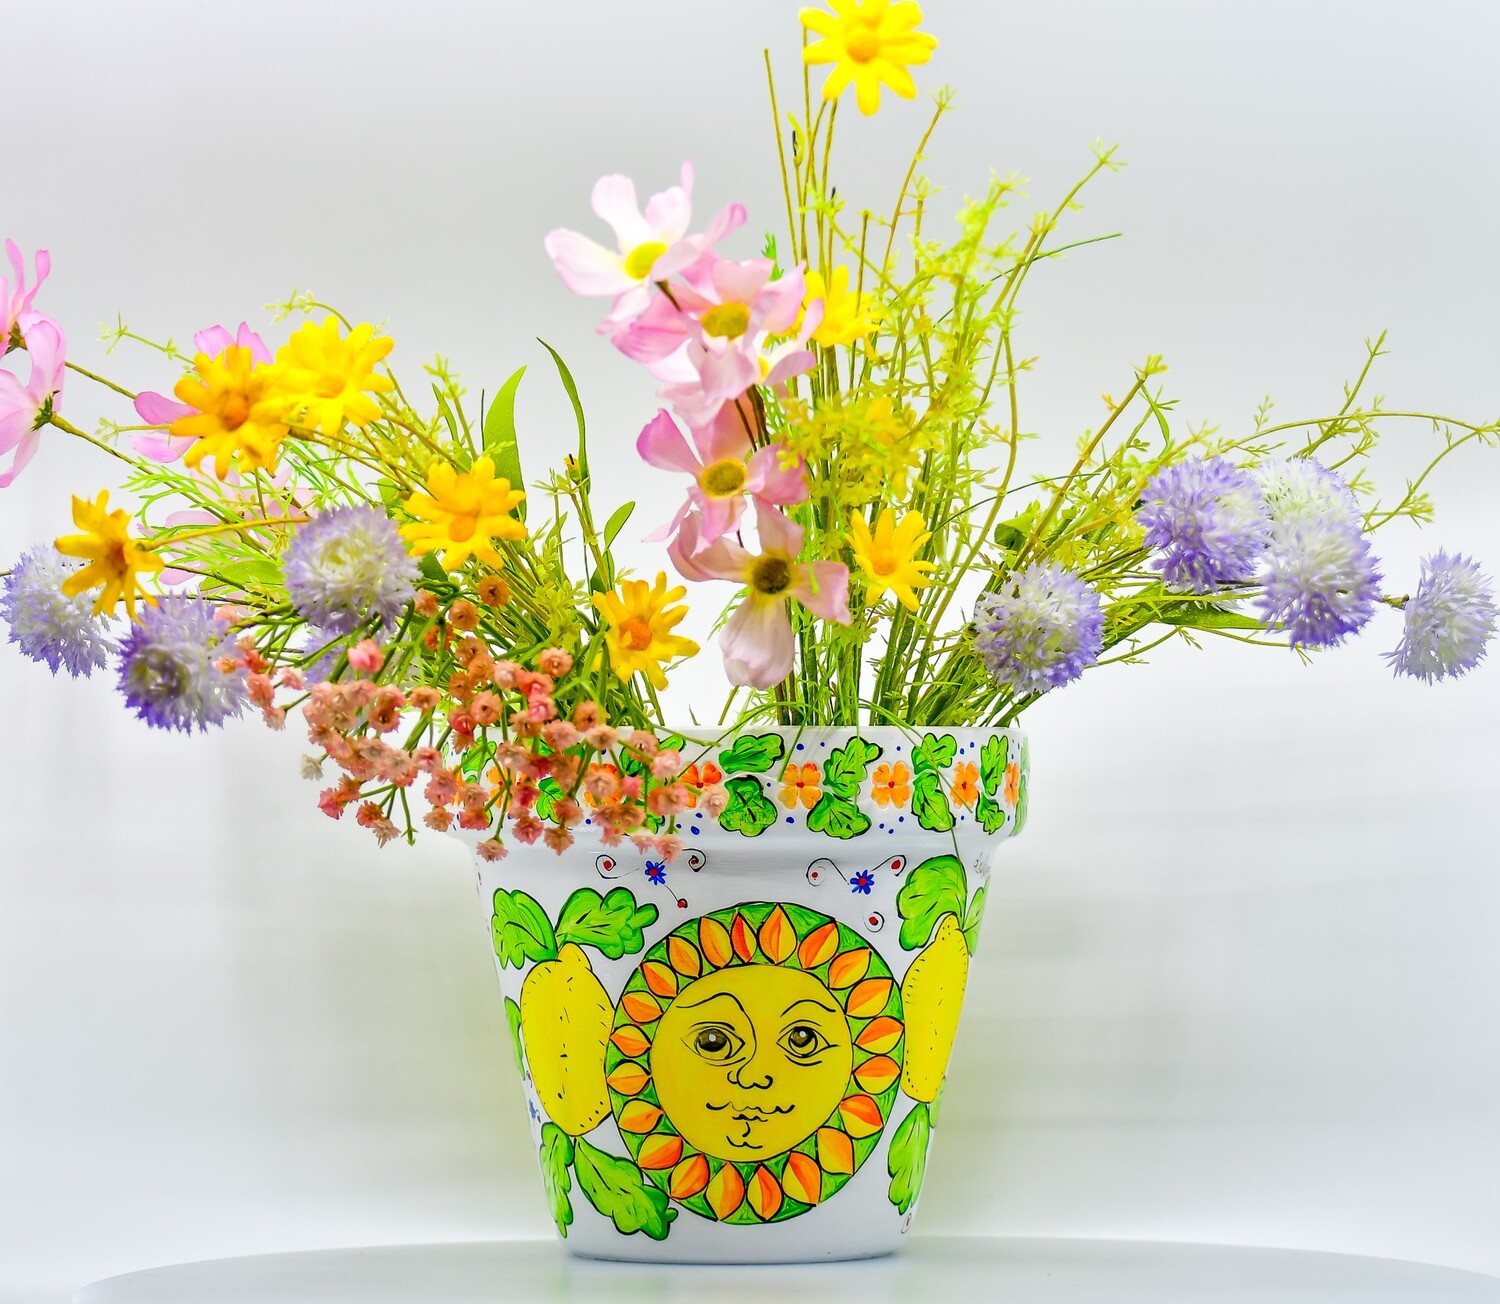 "Il sole felice nei limoni" hand painted ceramic planter